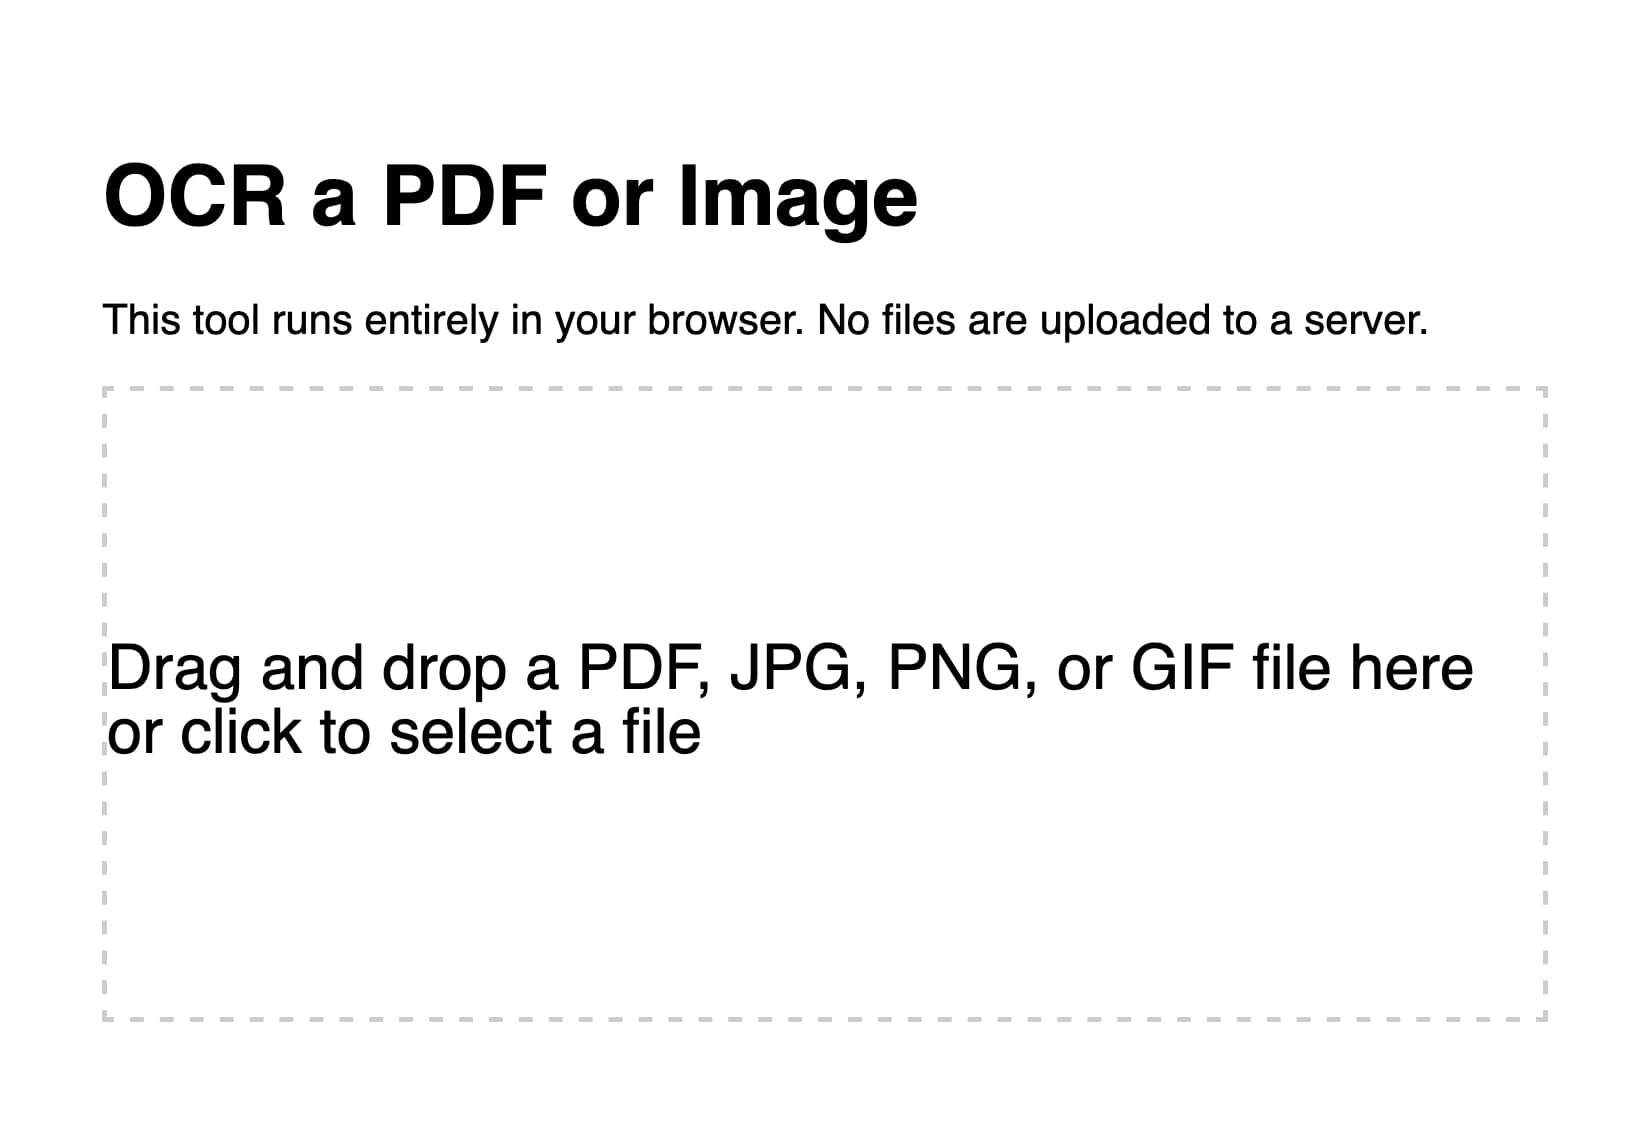 网站顶部的标题是“OCR a PDF or Image - This tool runs entirely in your browser. No files are uploaded to a server.”下面是一个虚线框，框内的文字提示“将 PDF、JPG、PNG 或 GIF 文件拖放至此处，或点击选择文件。”